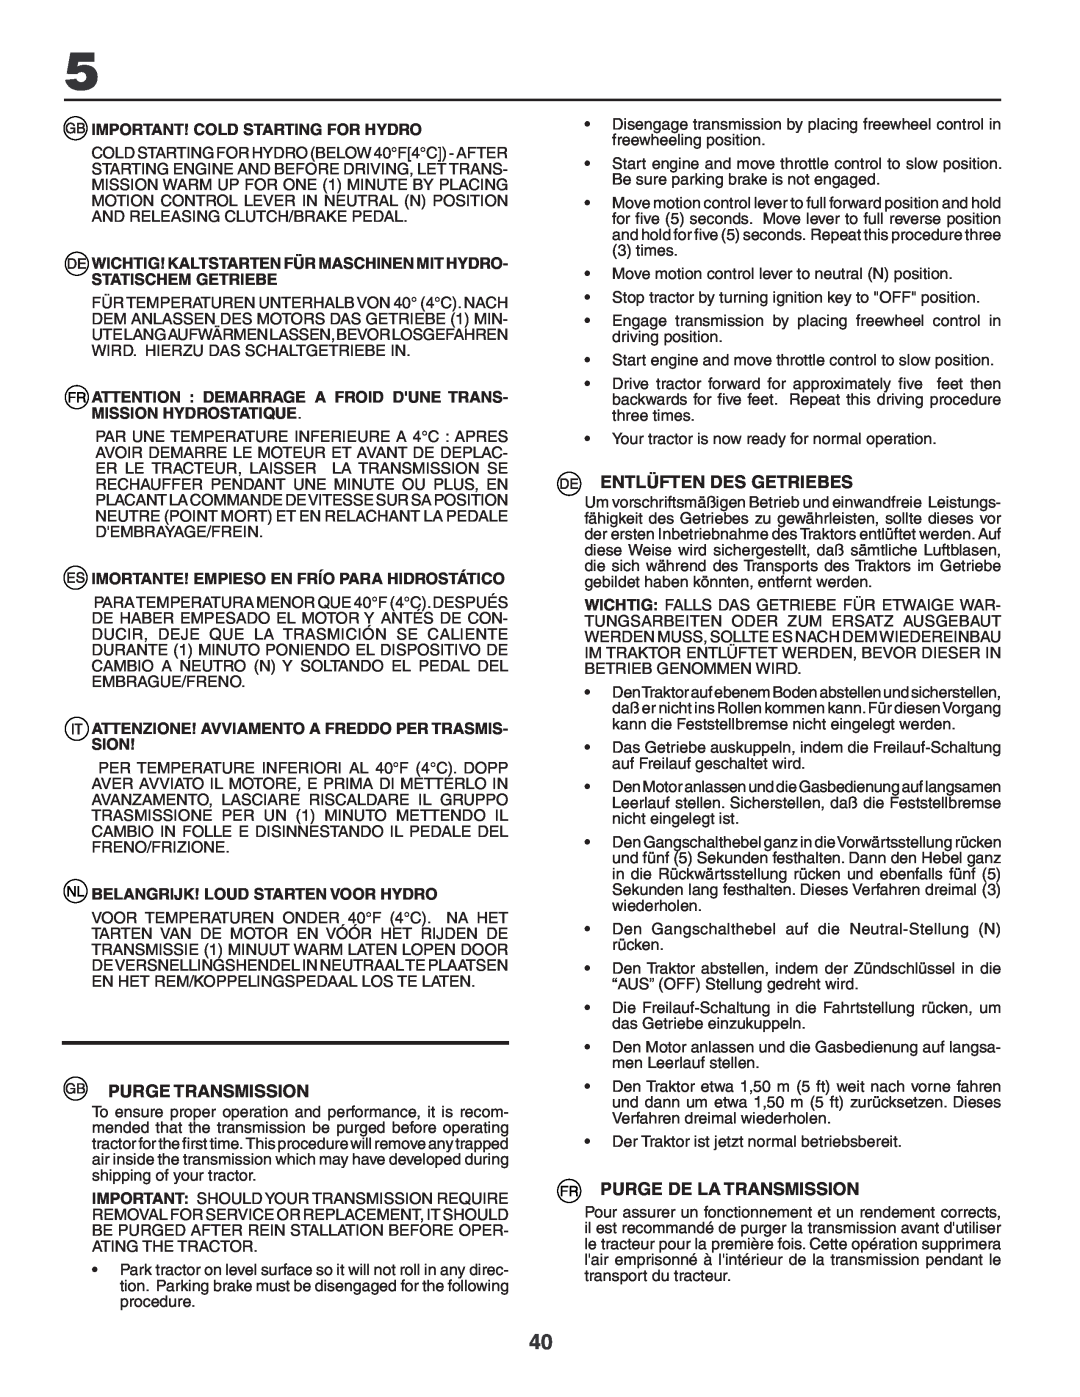 Husqvarna YTH180XP instruction manual Purge Transmission, Entlüften Des Getriebes, Purge De La Transmission 